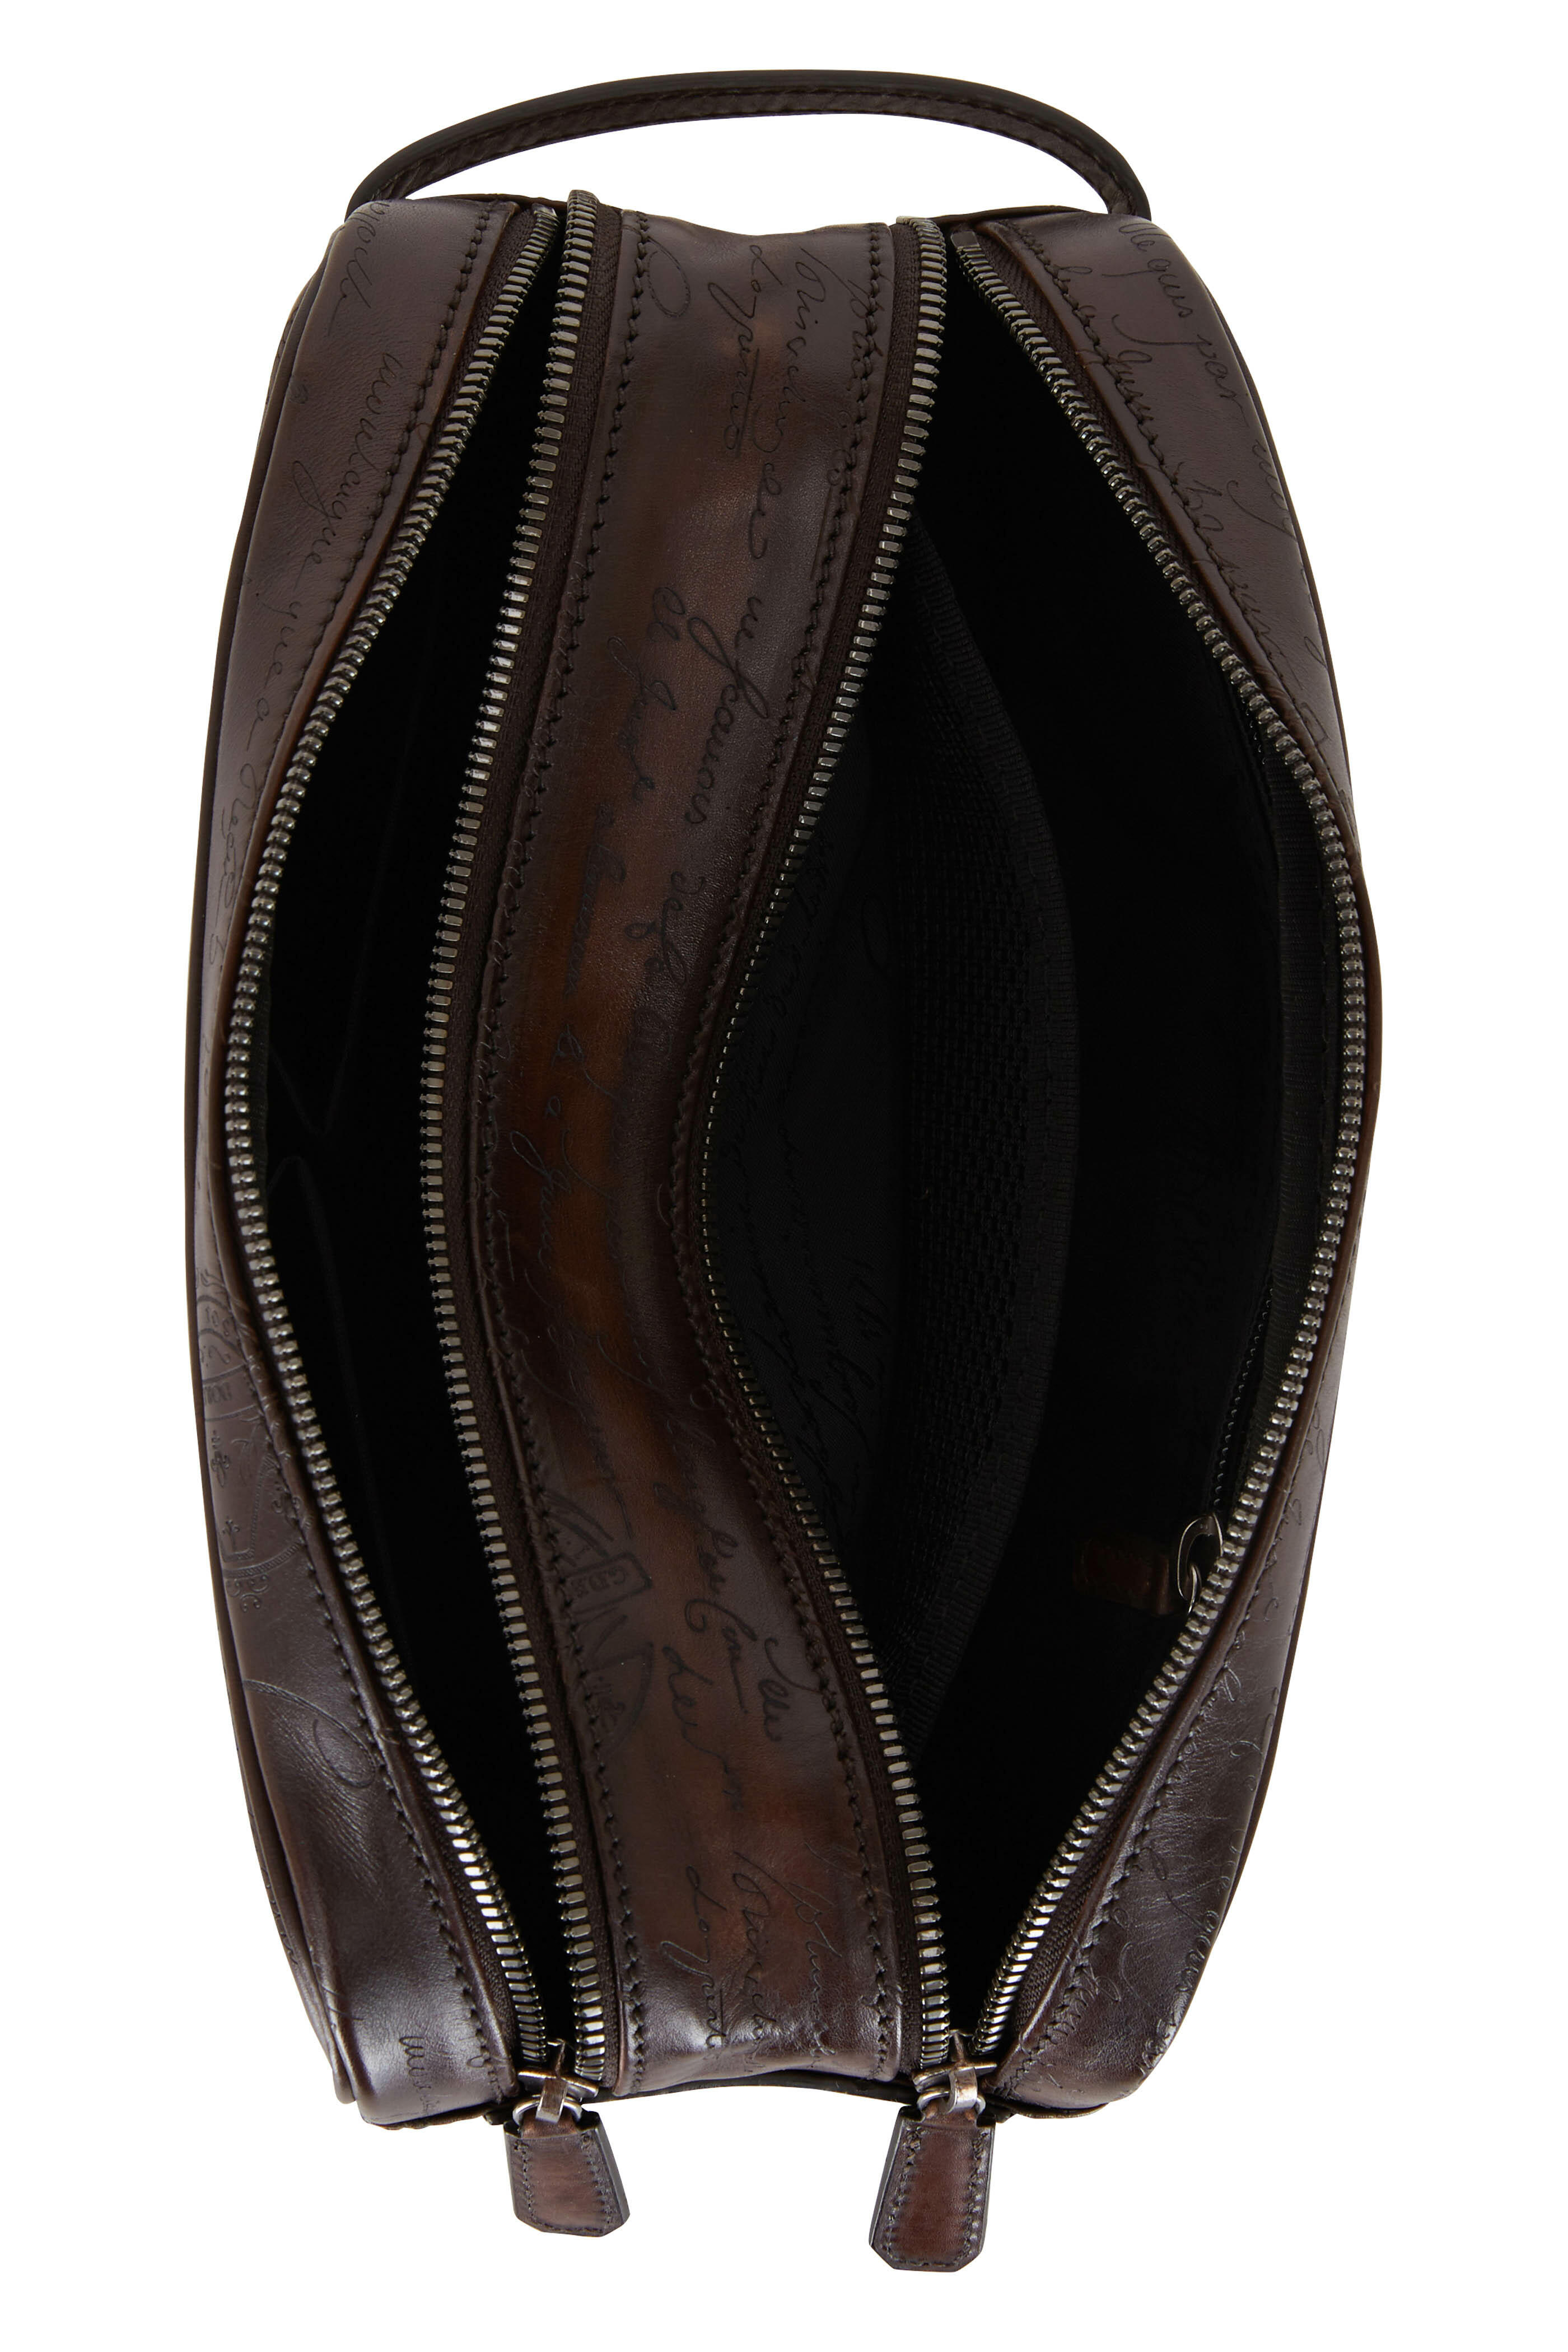 Brown Scritto-debossed leather gloves, Berluti